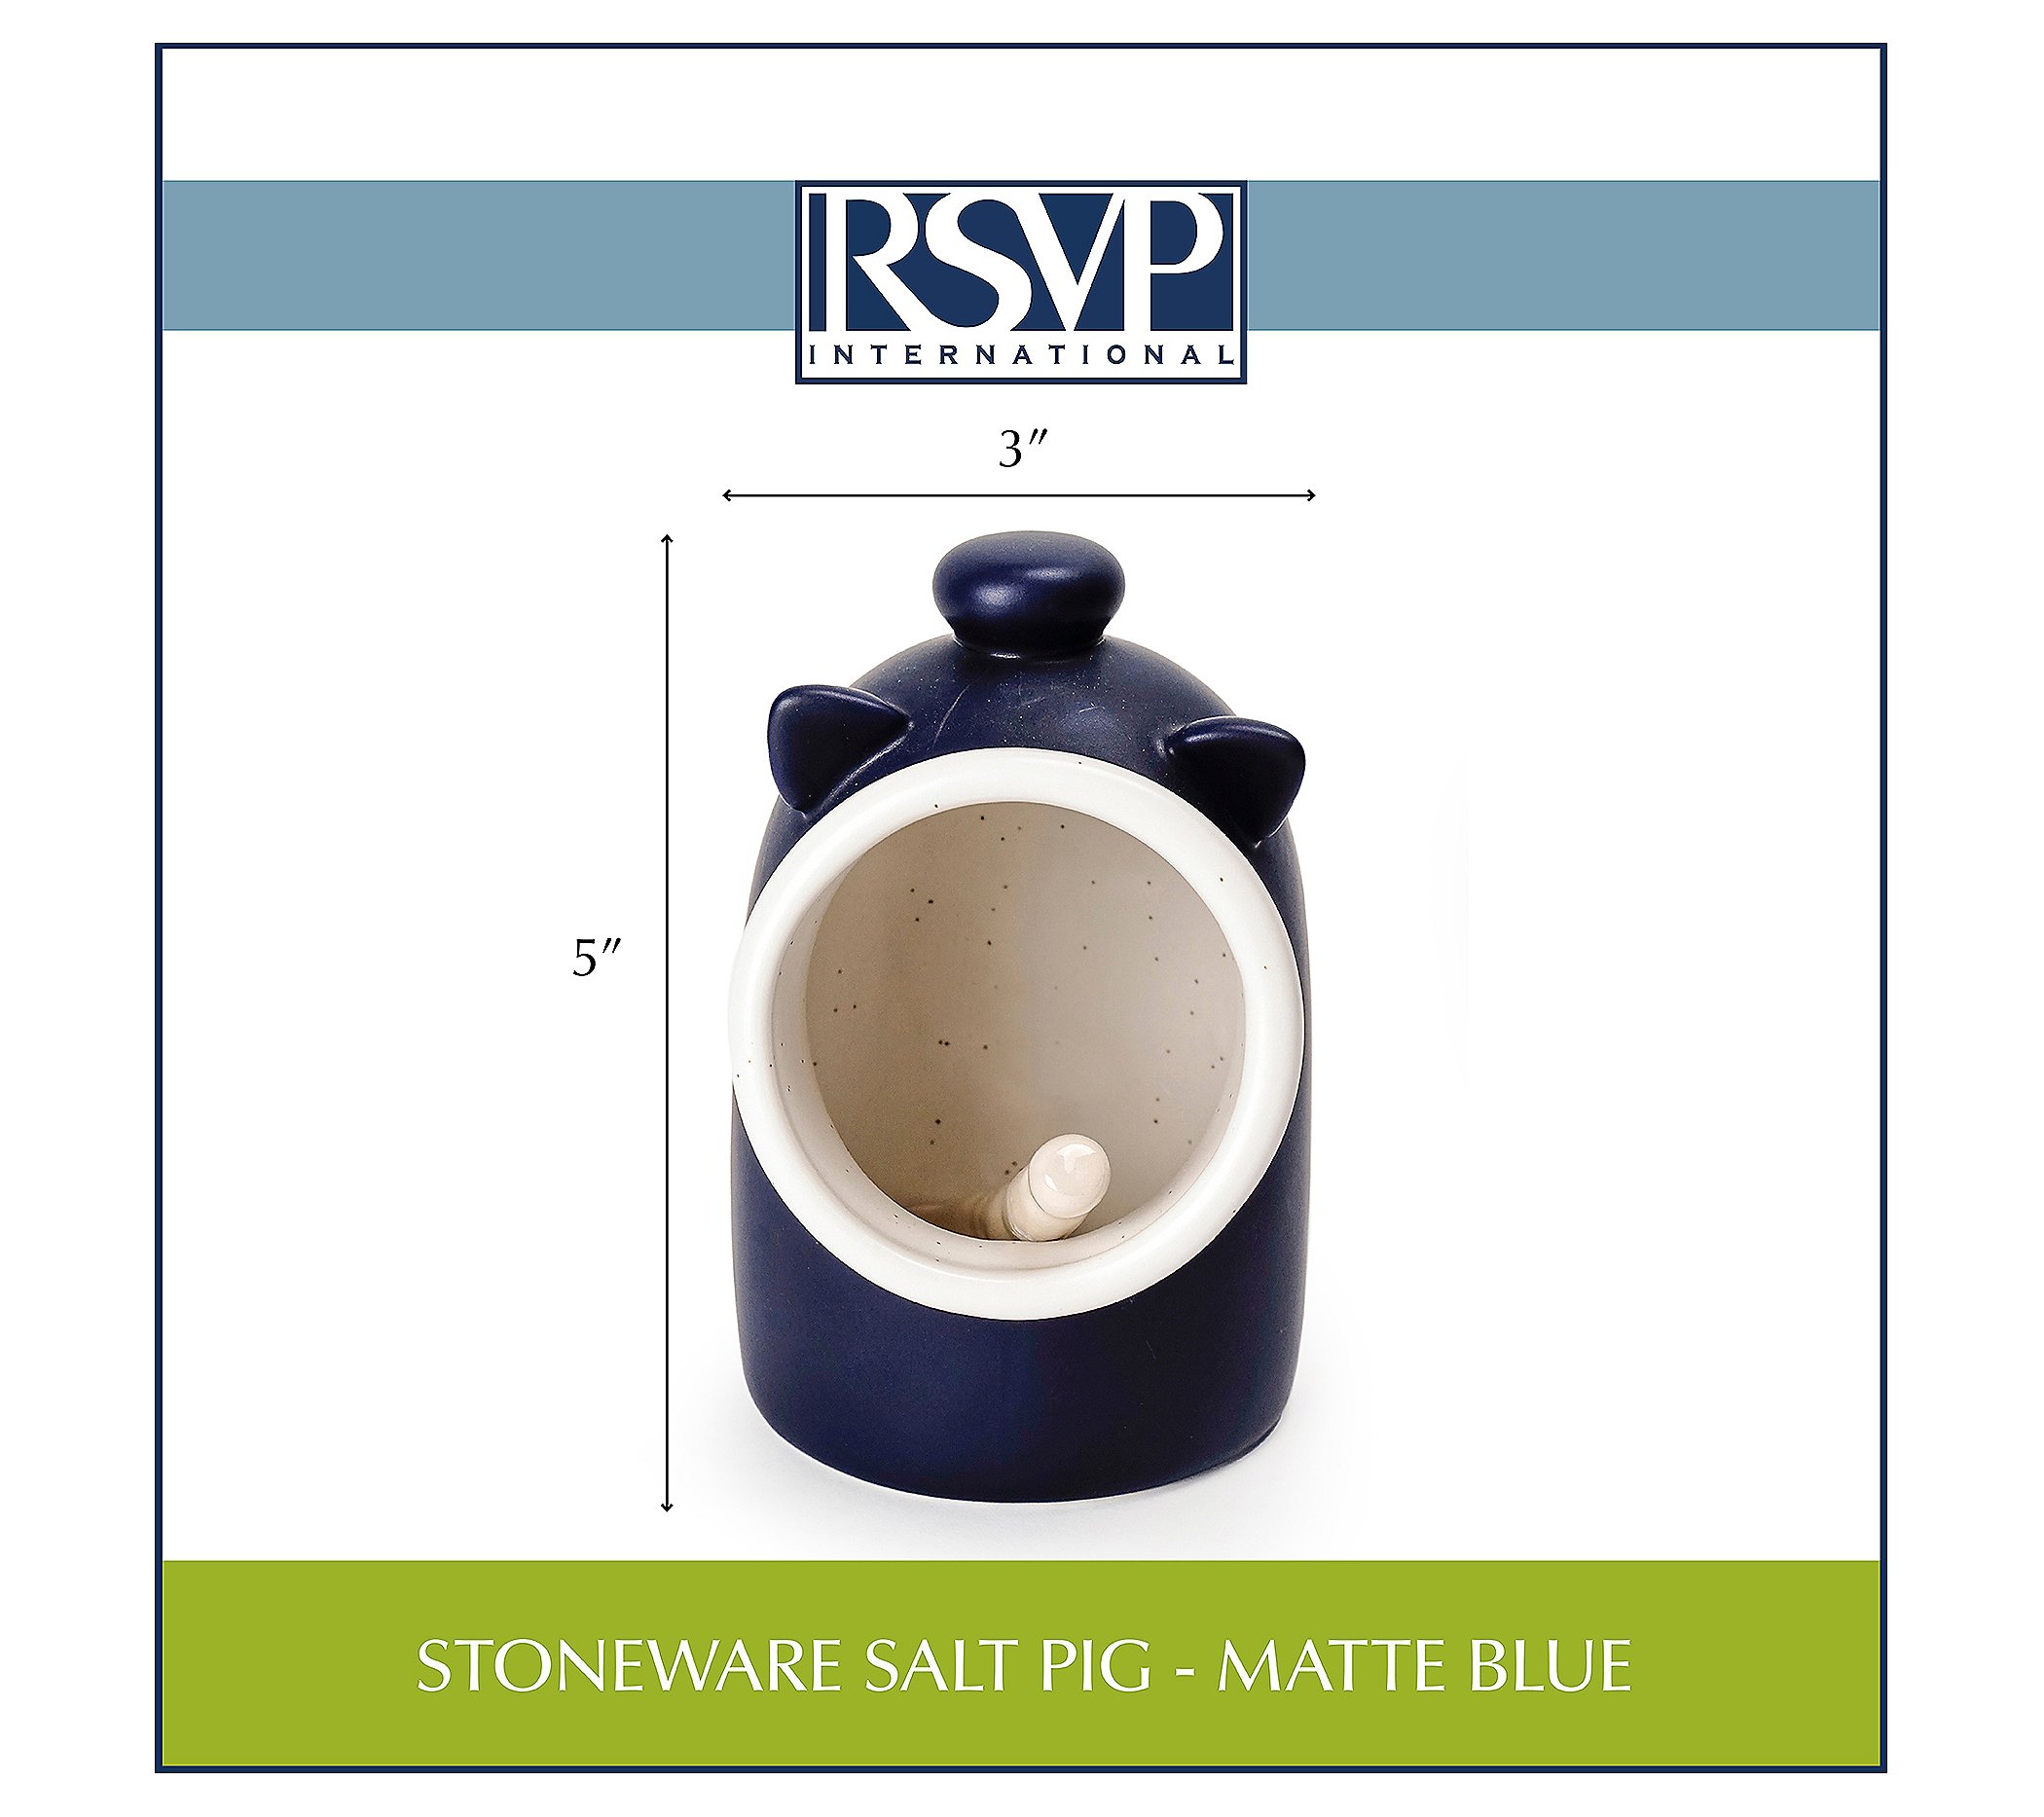 RSVP Stoneware Salt Pig Container